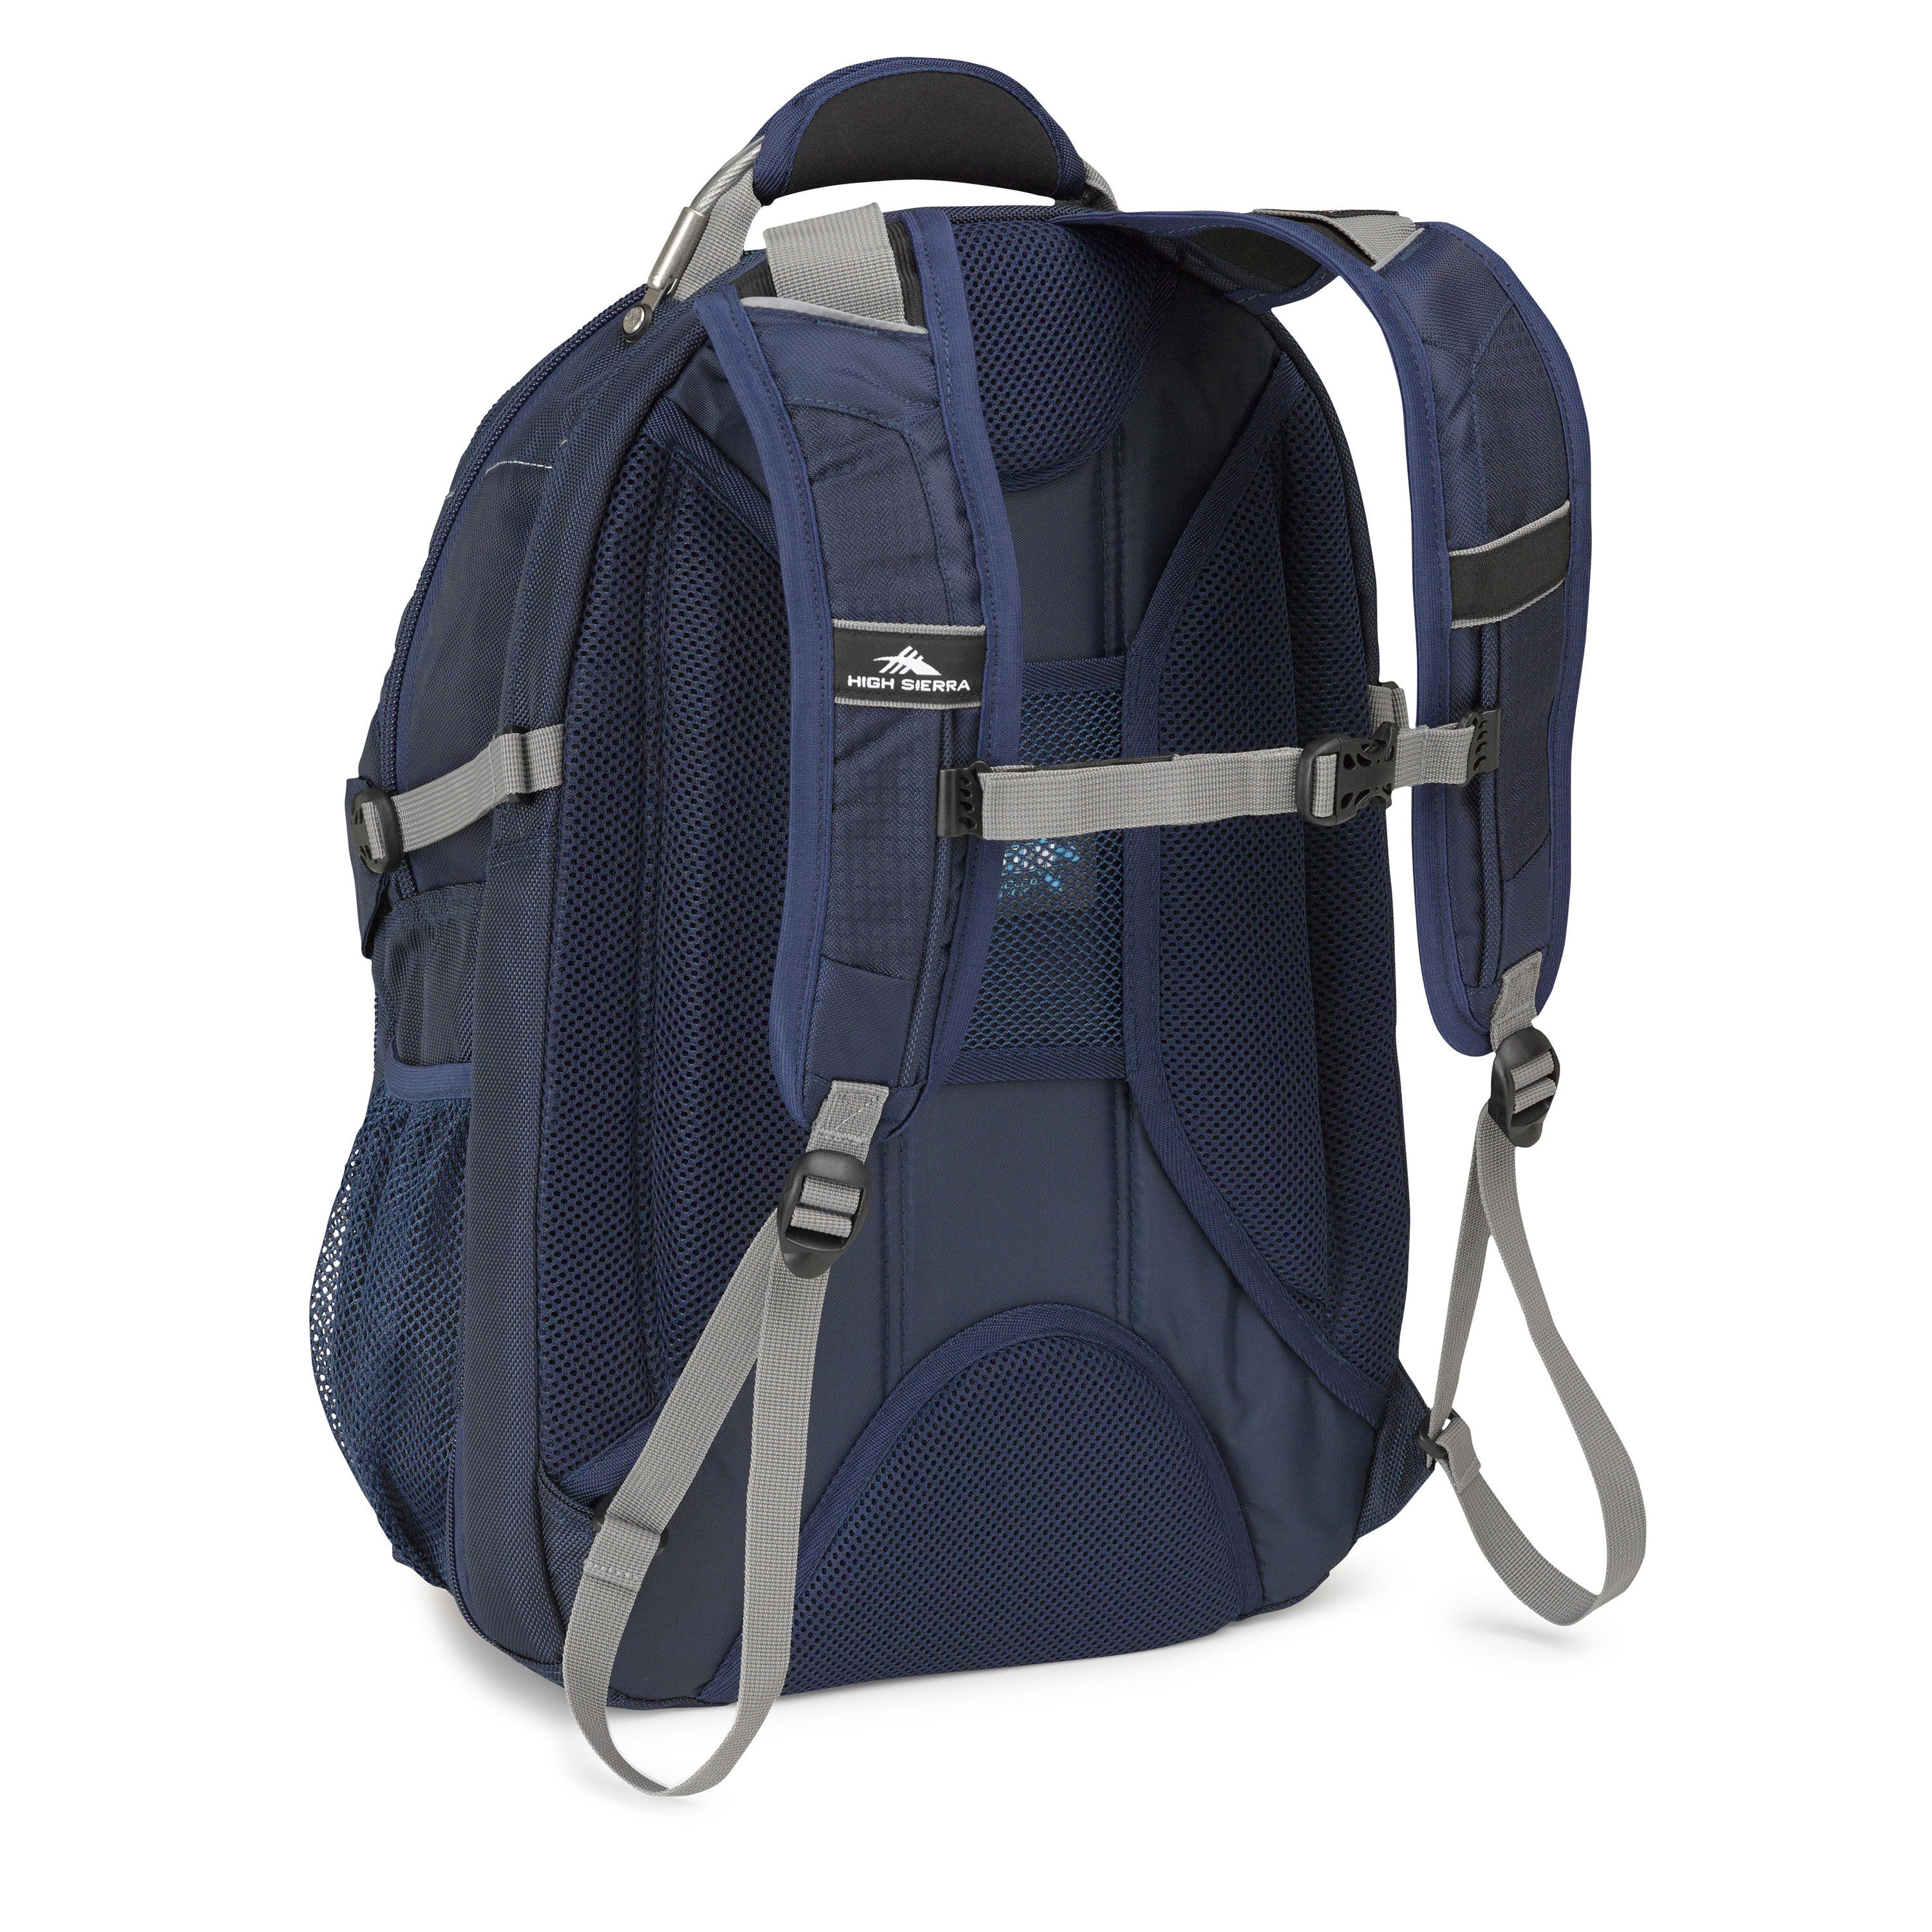 Buy XBT TSA Backpack for USD 59.99